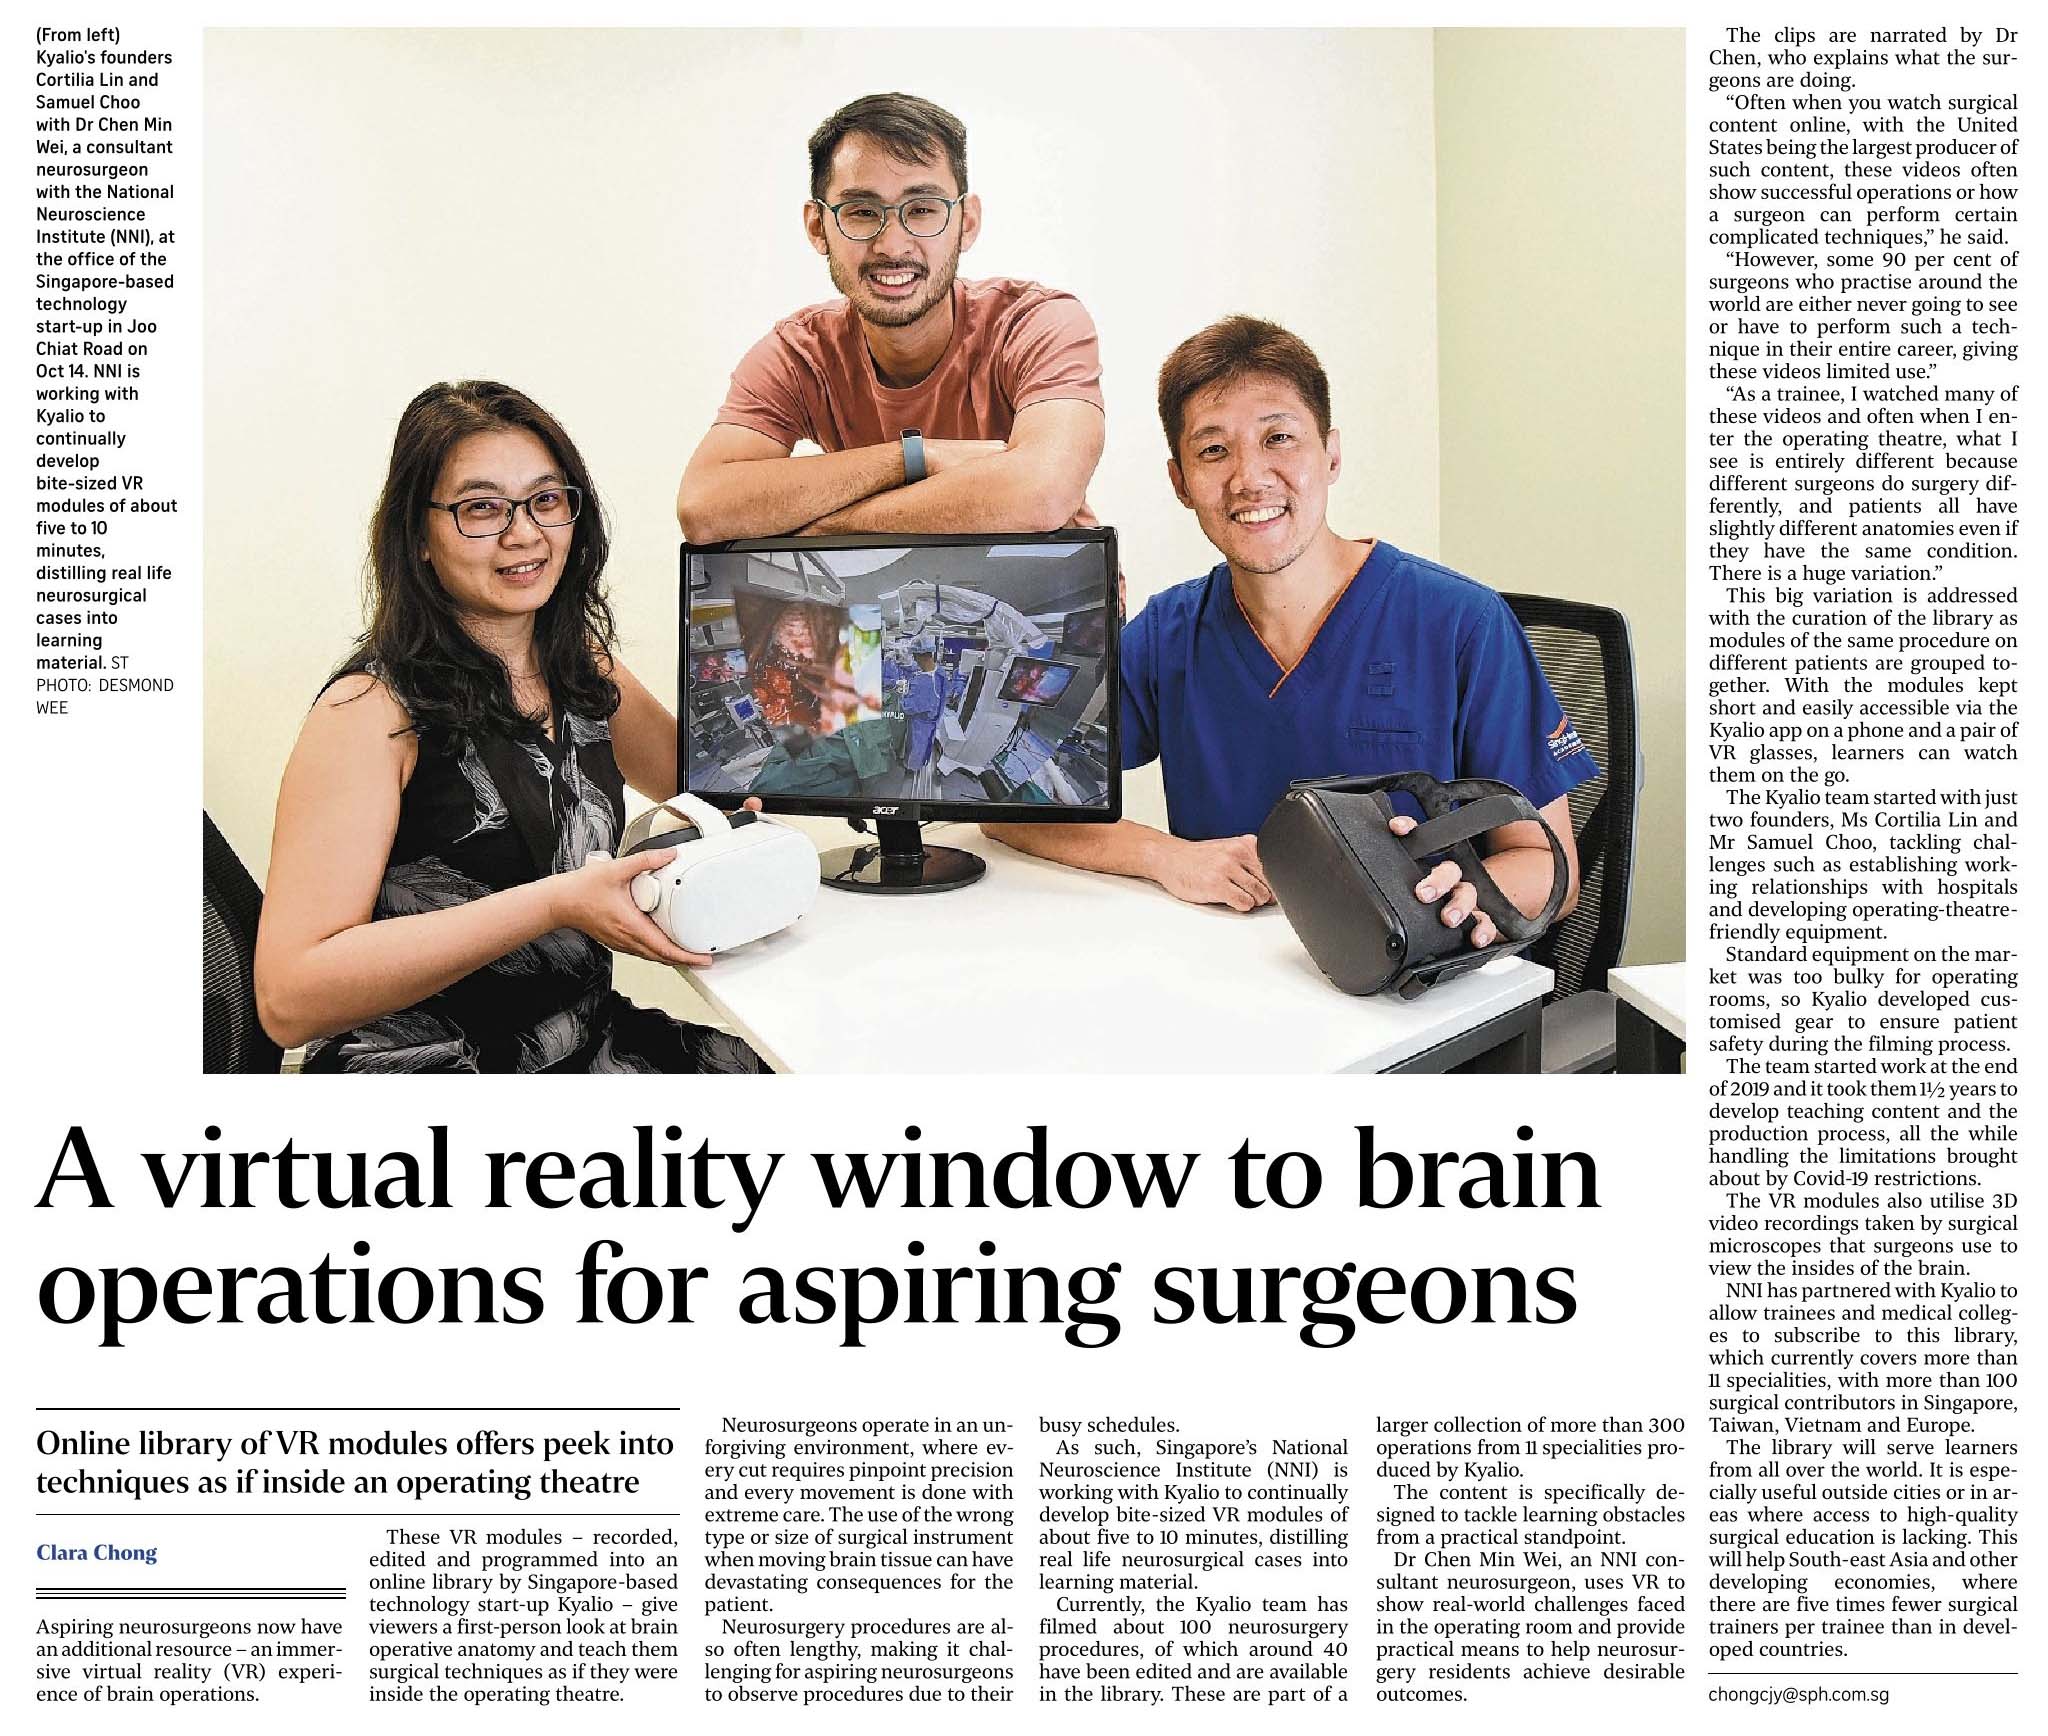 A virtual reality window to brain operations